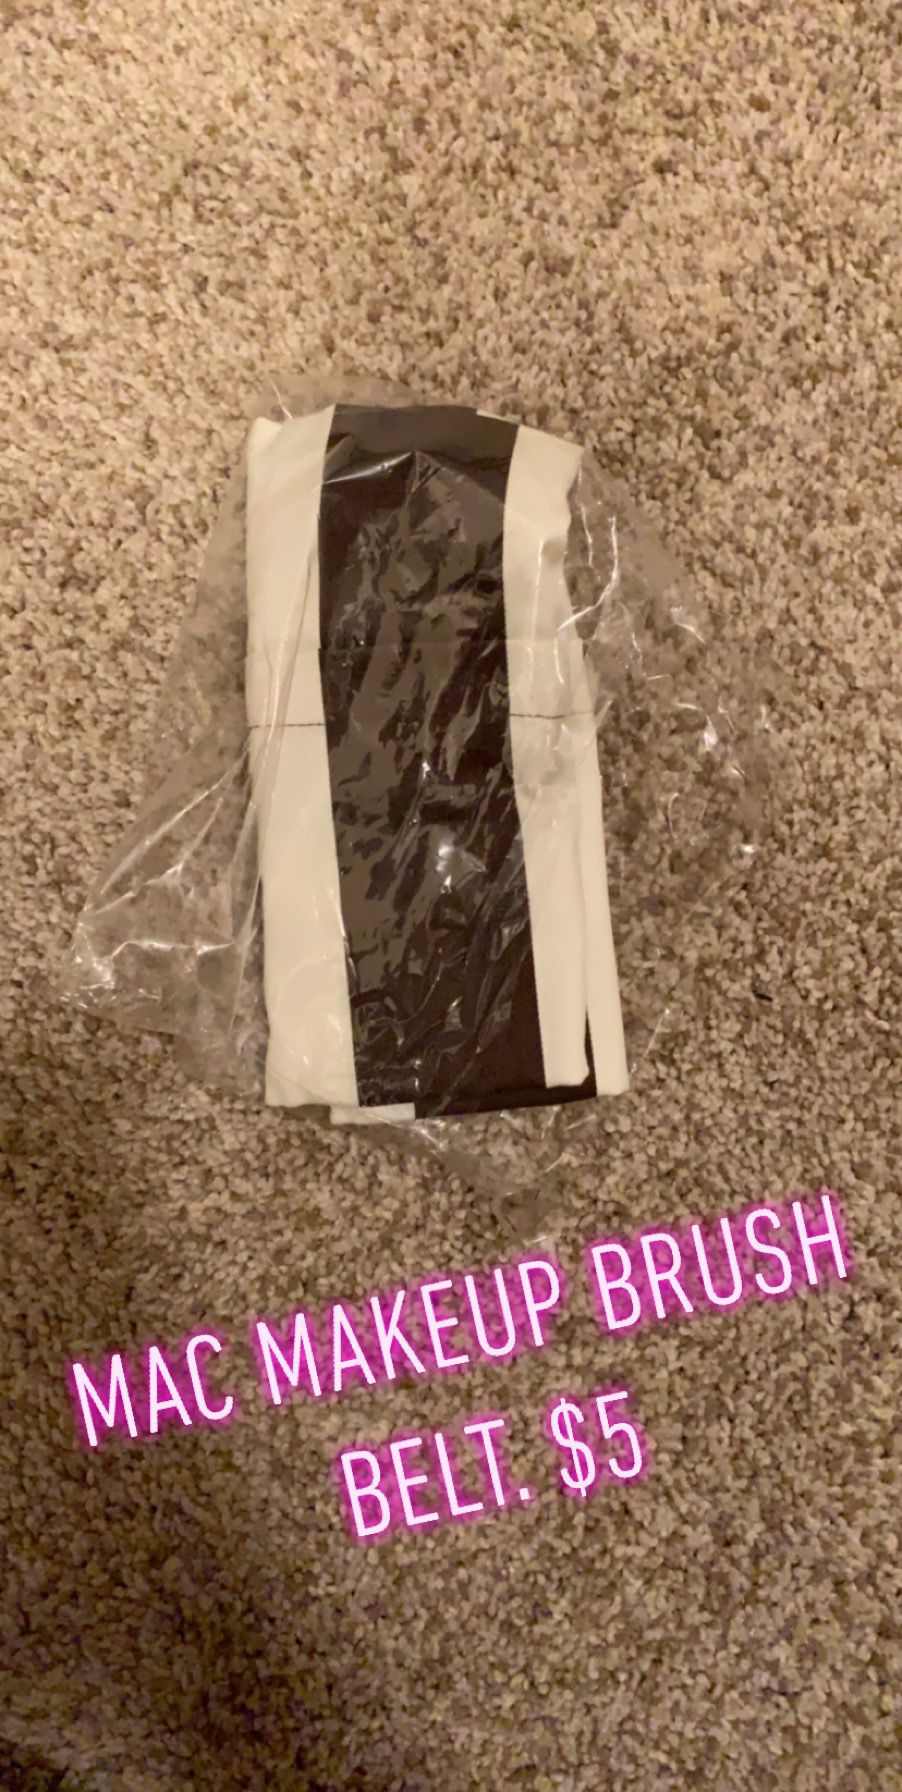 Mac makeup brush belt